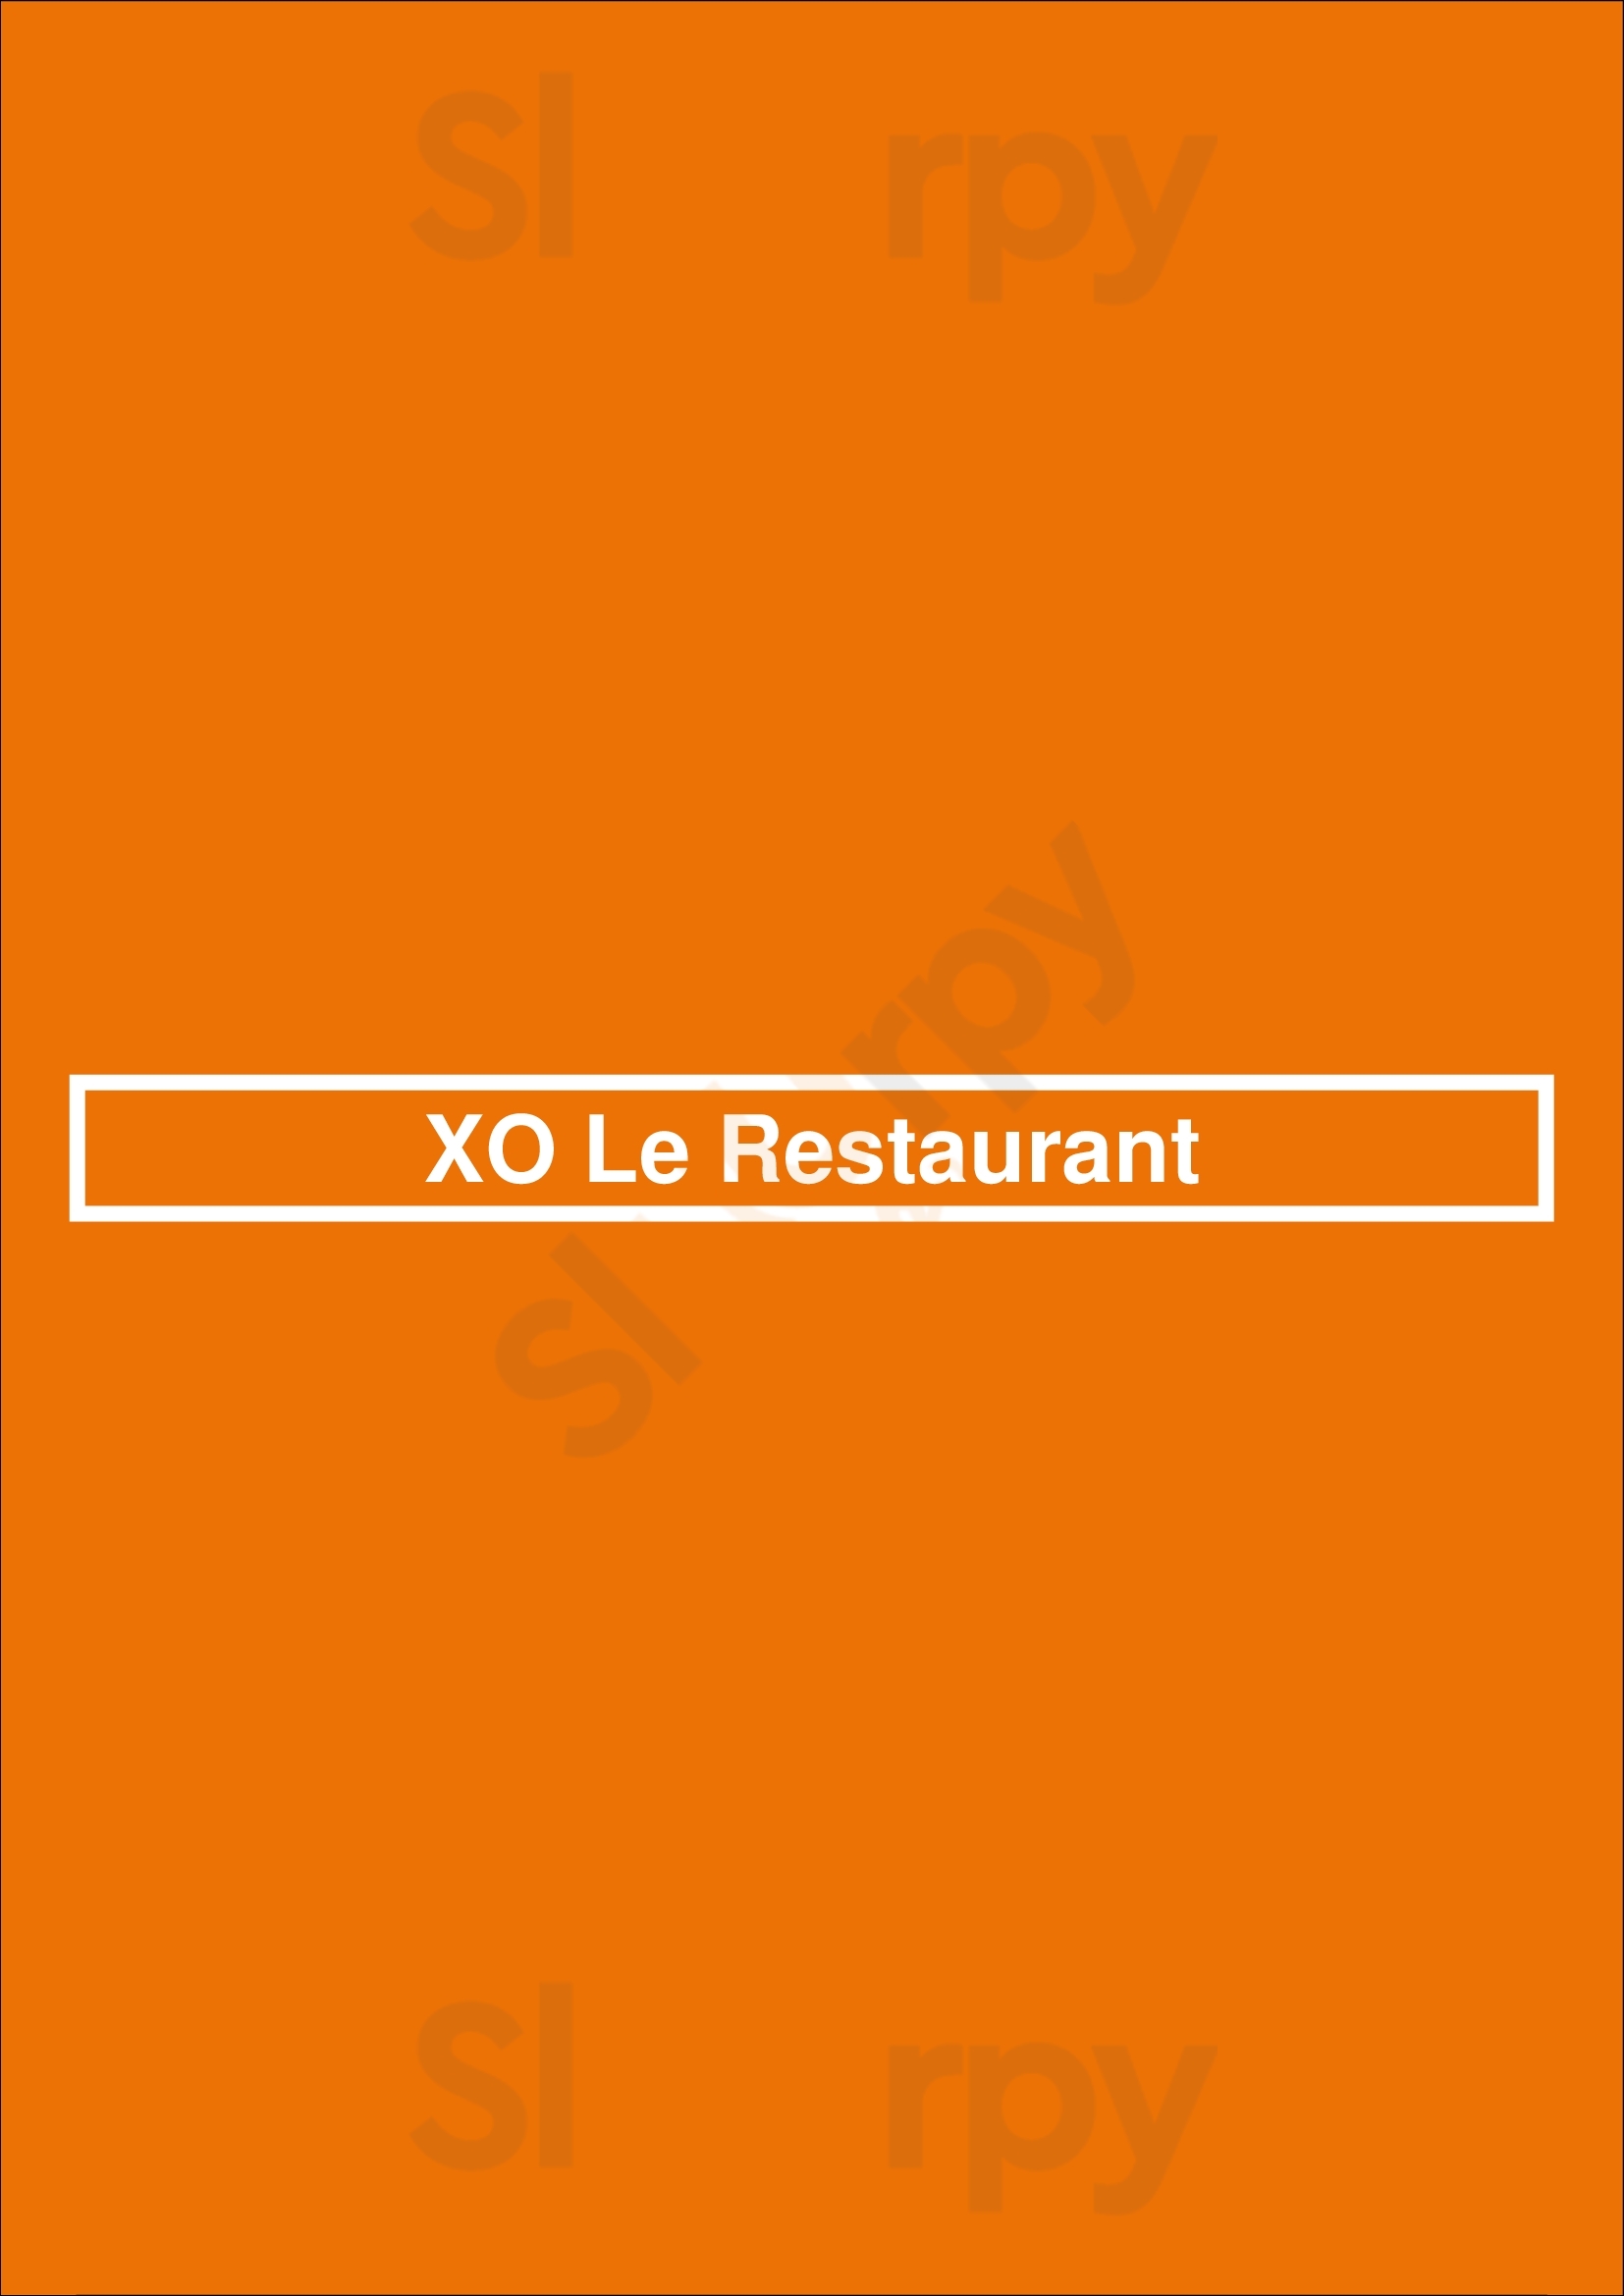 James Le Restaurant Montreal Menu - 1